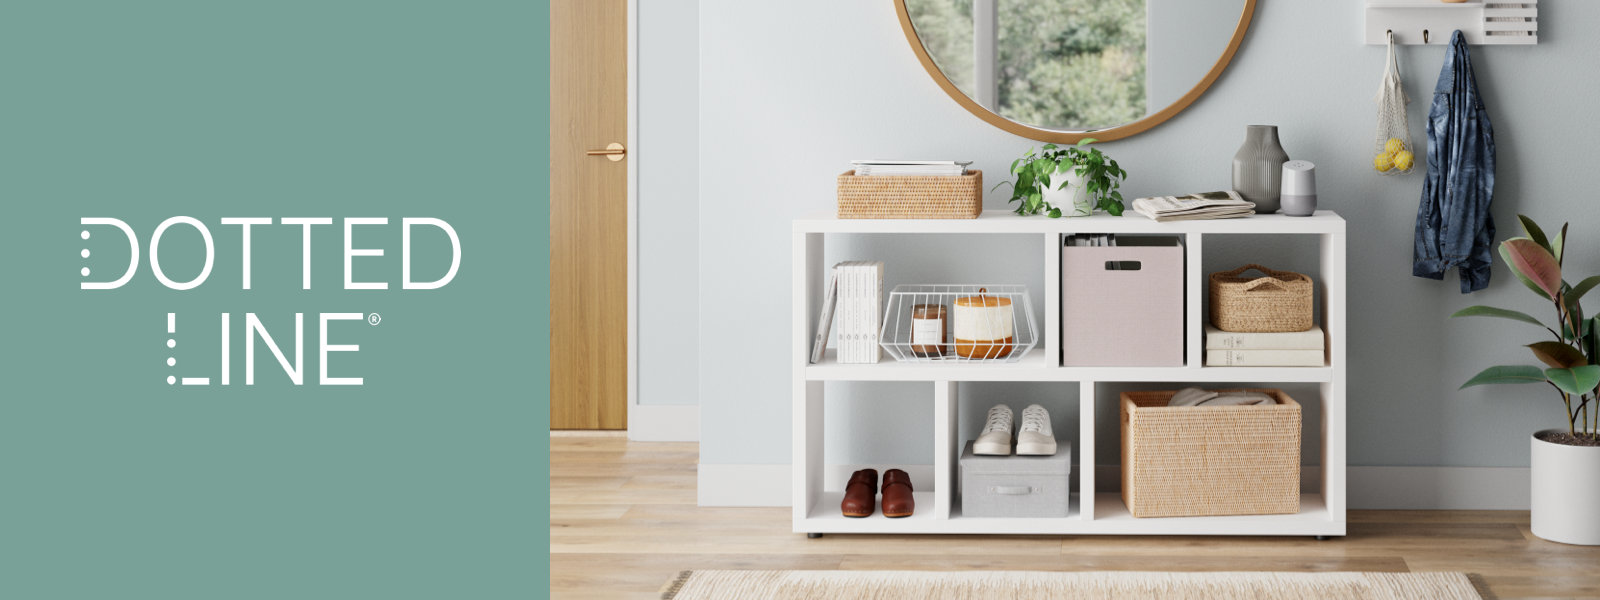 Inside a Professional Organizer's Home: The Laundry Closet - Helen & Co  Interior Design